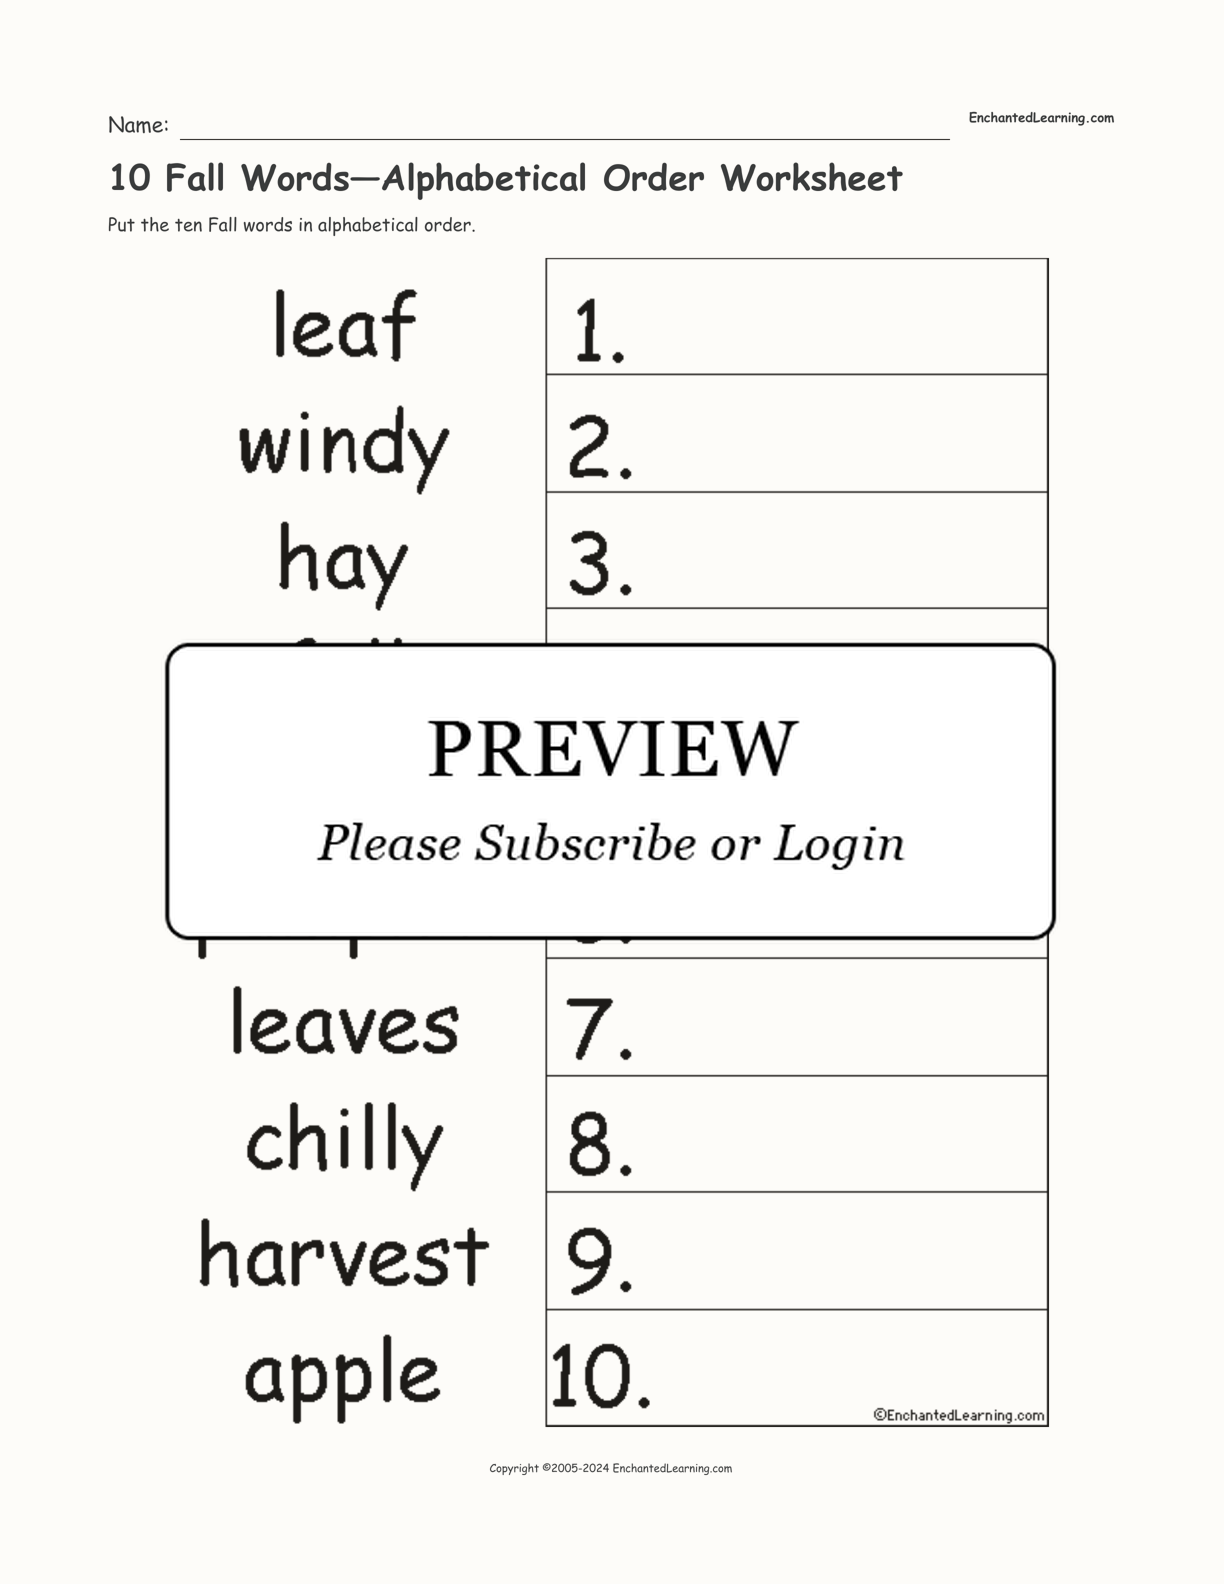 10 Fall Words—Alphabetical Order Worksheet interactive worksheet page 1